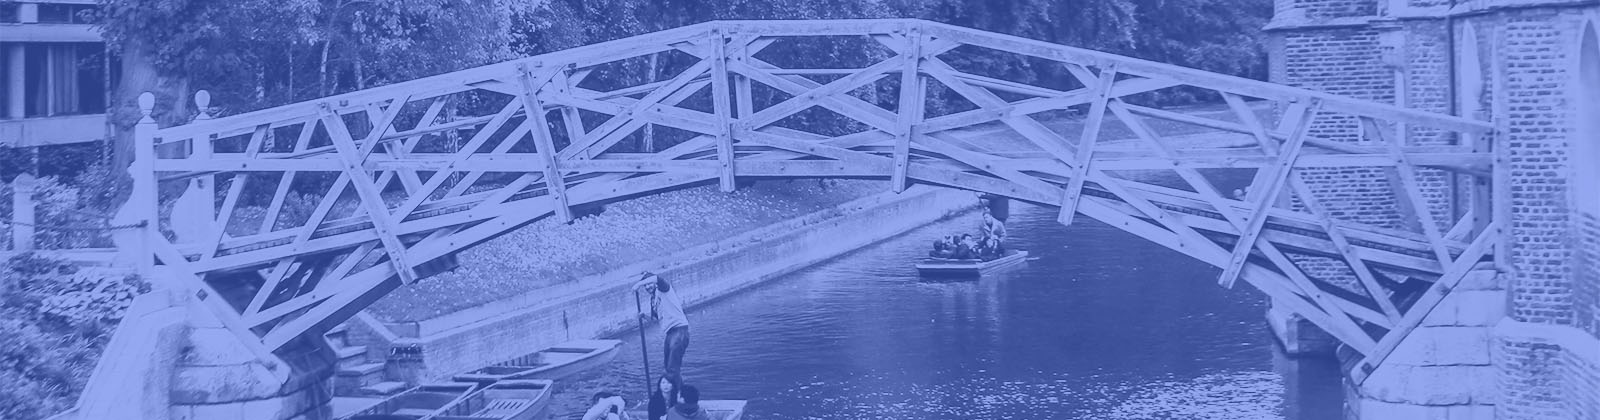 math bridge cambridge geometric bridge over water blue